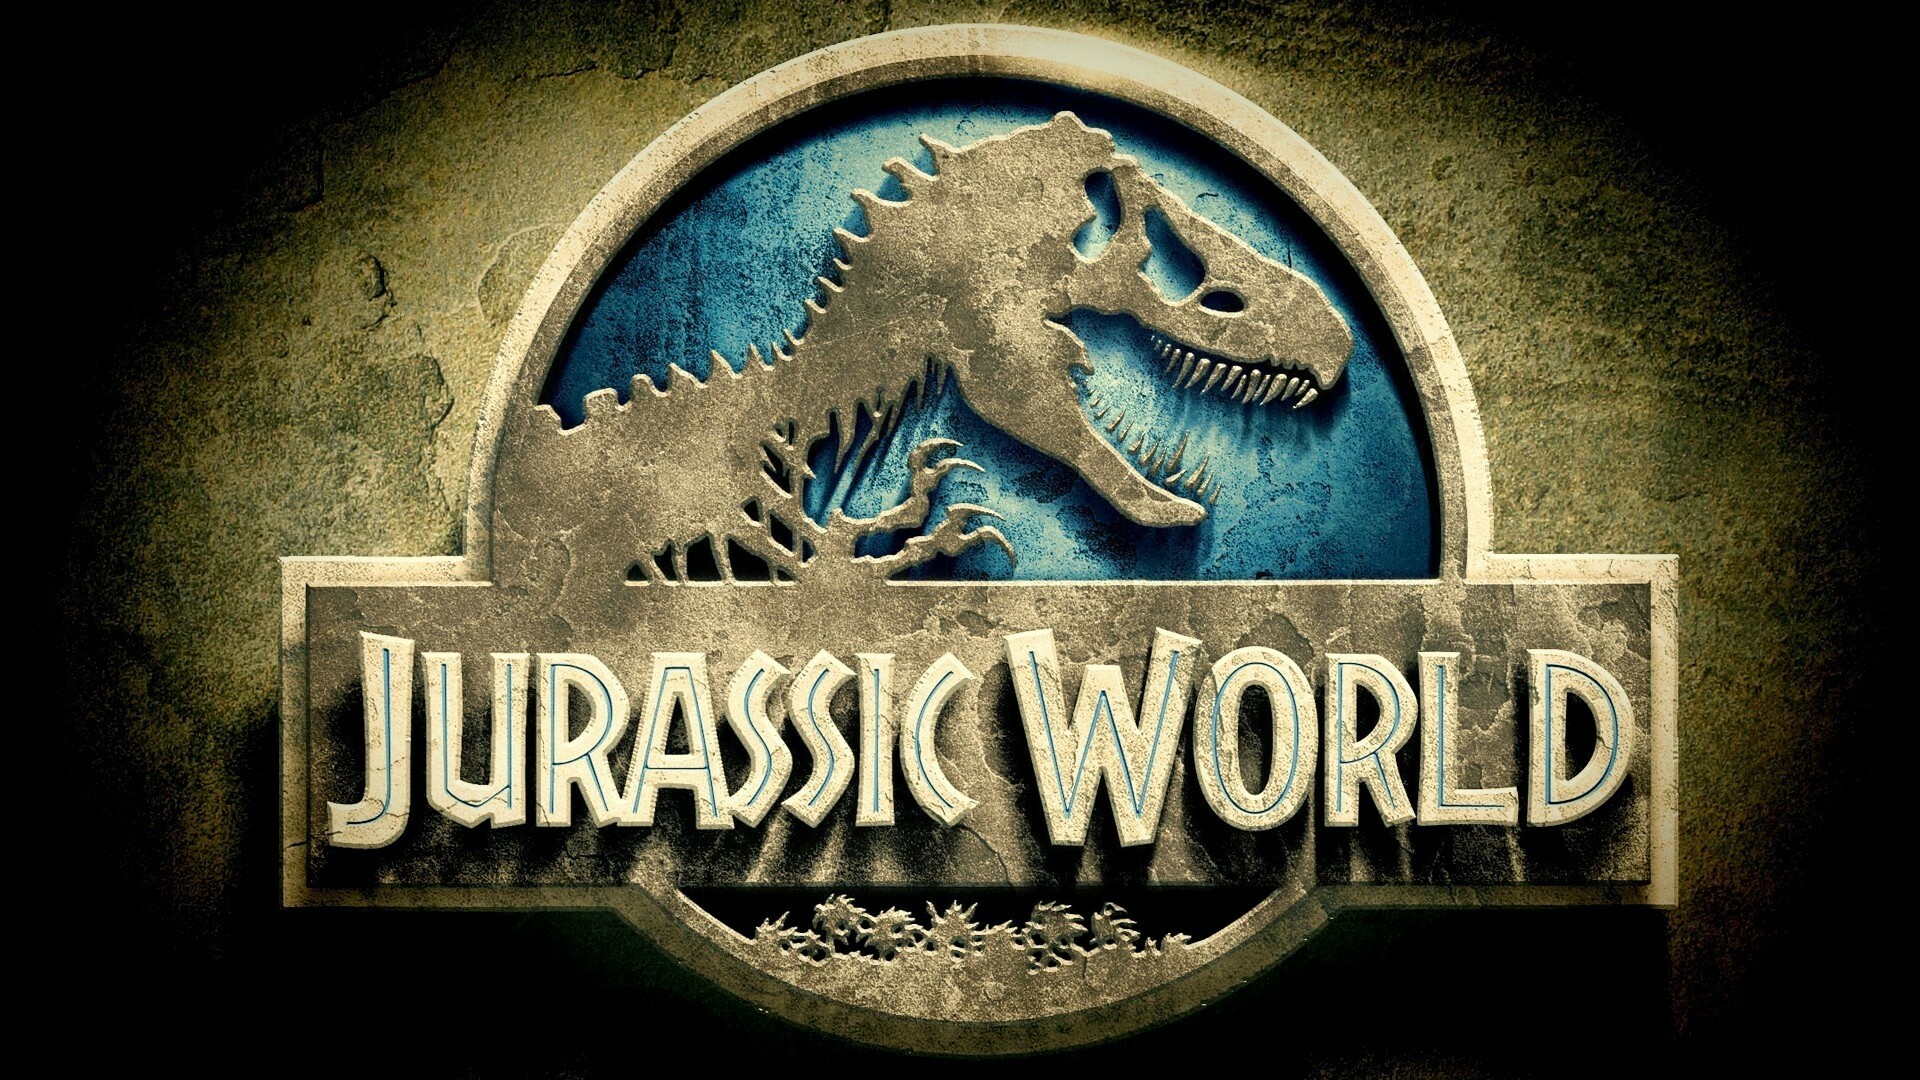 Jurassic World: A new theme park, built on the original site of Jurassic Park, creates a genetically modified hybrid dinosaur. 1920x1080 Full HD Wallpaper.